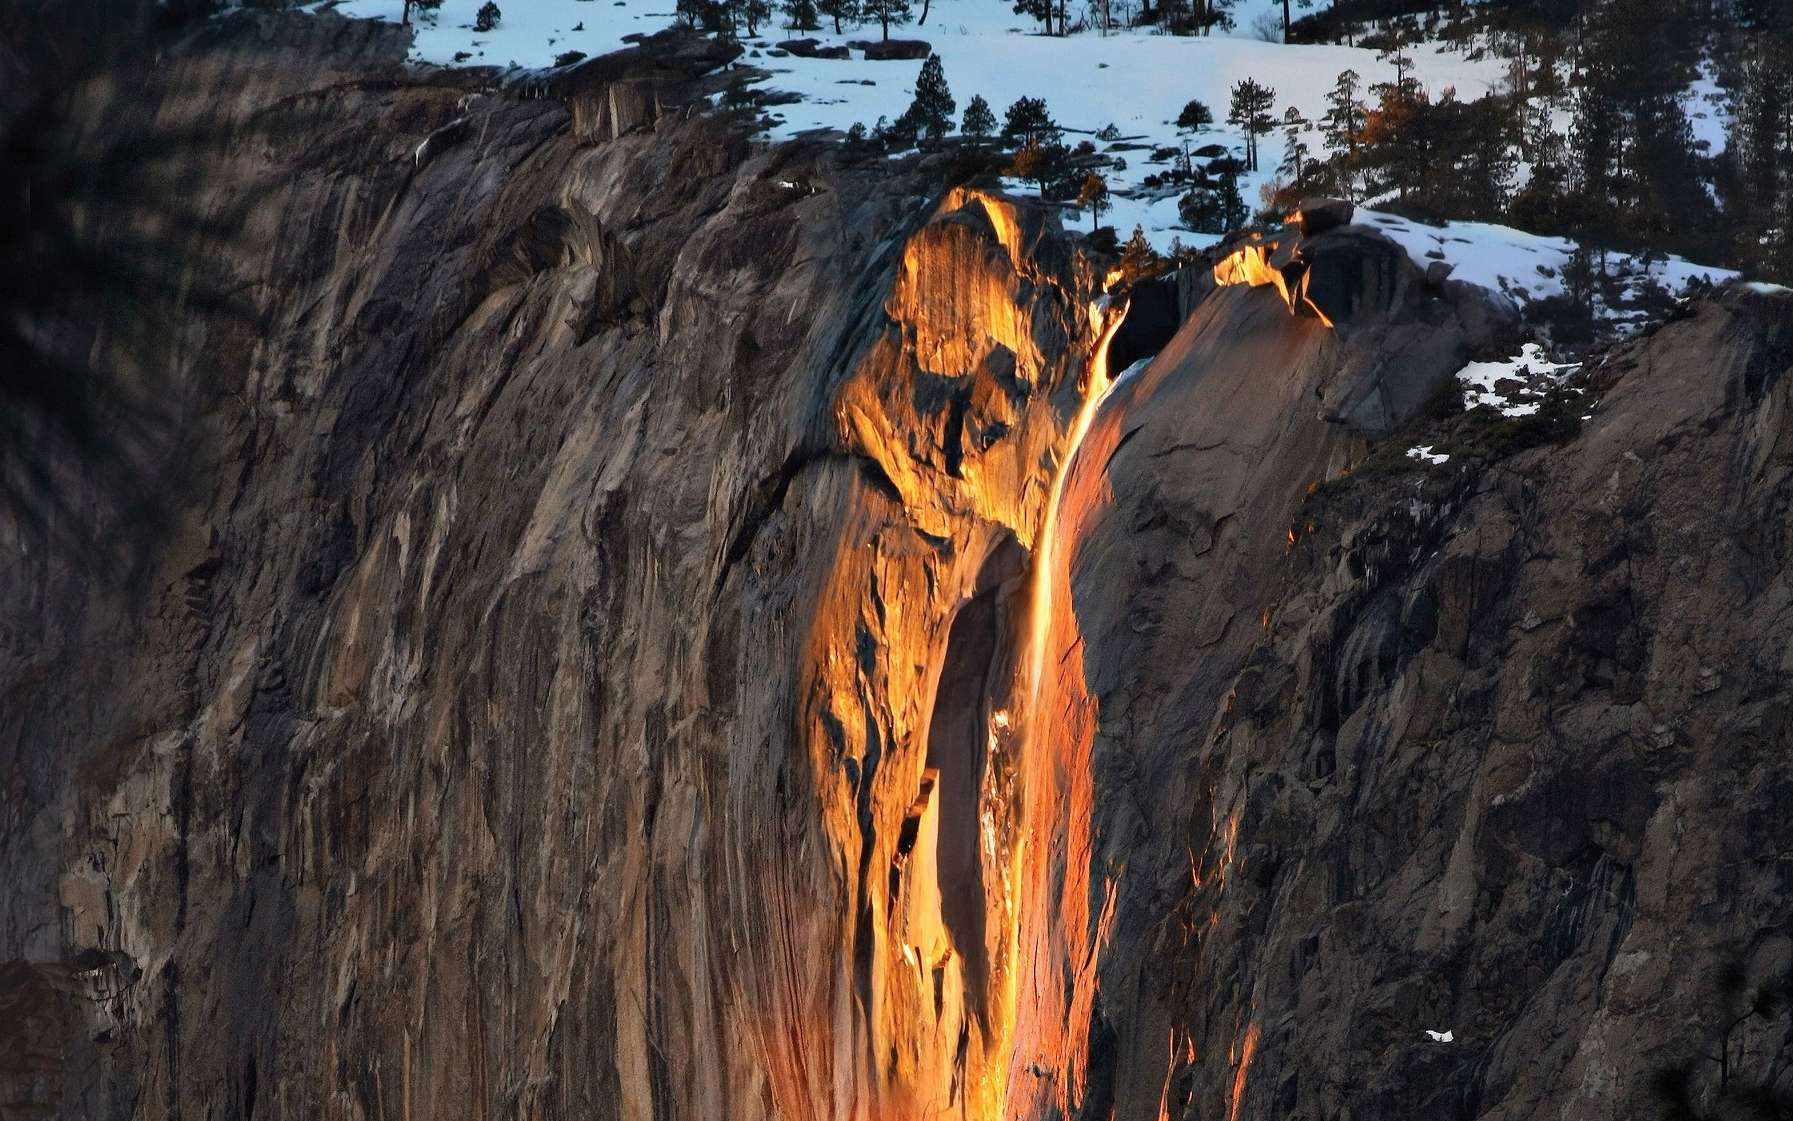 La cascade de feu illumine à nouveau le parc de Yosemite